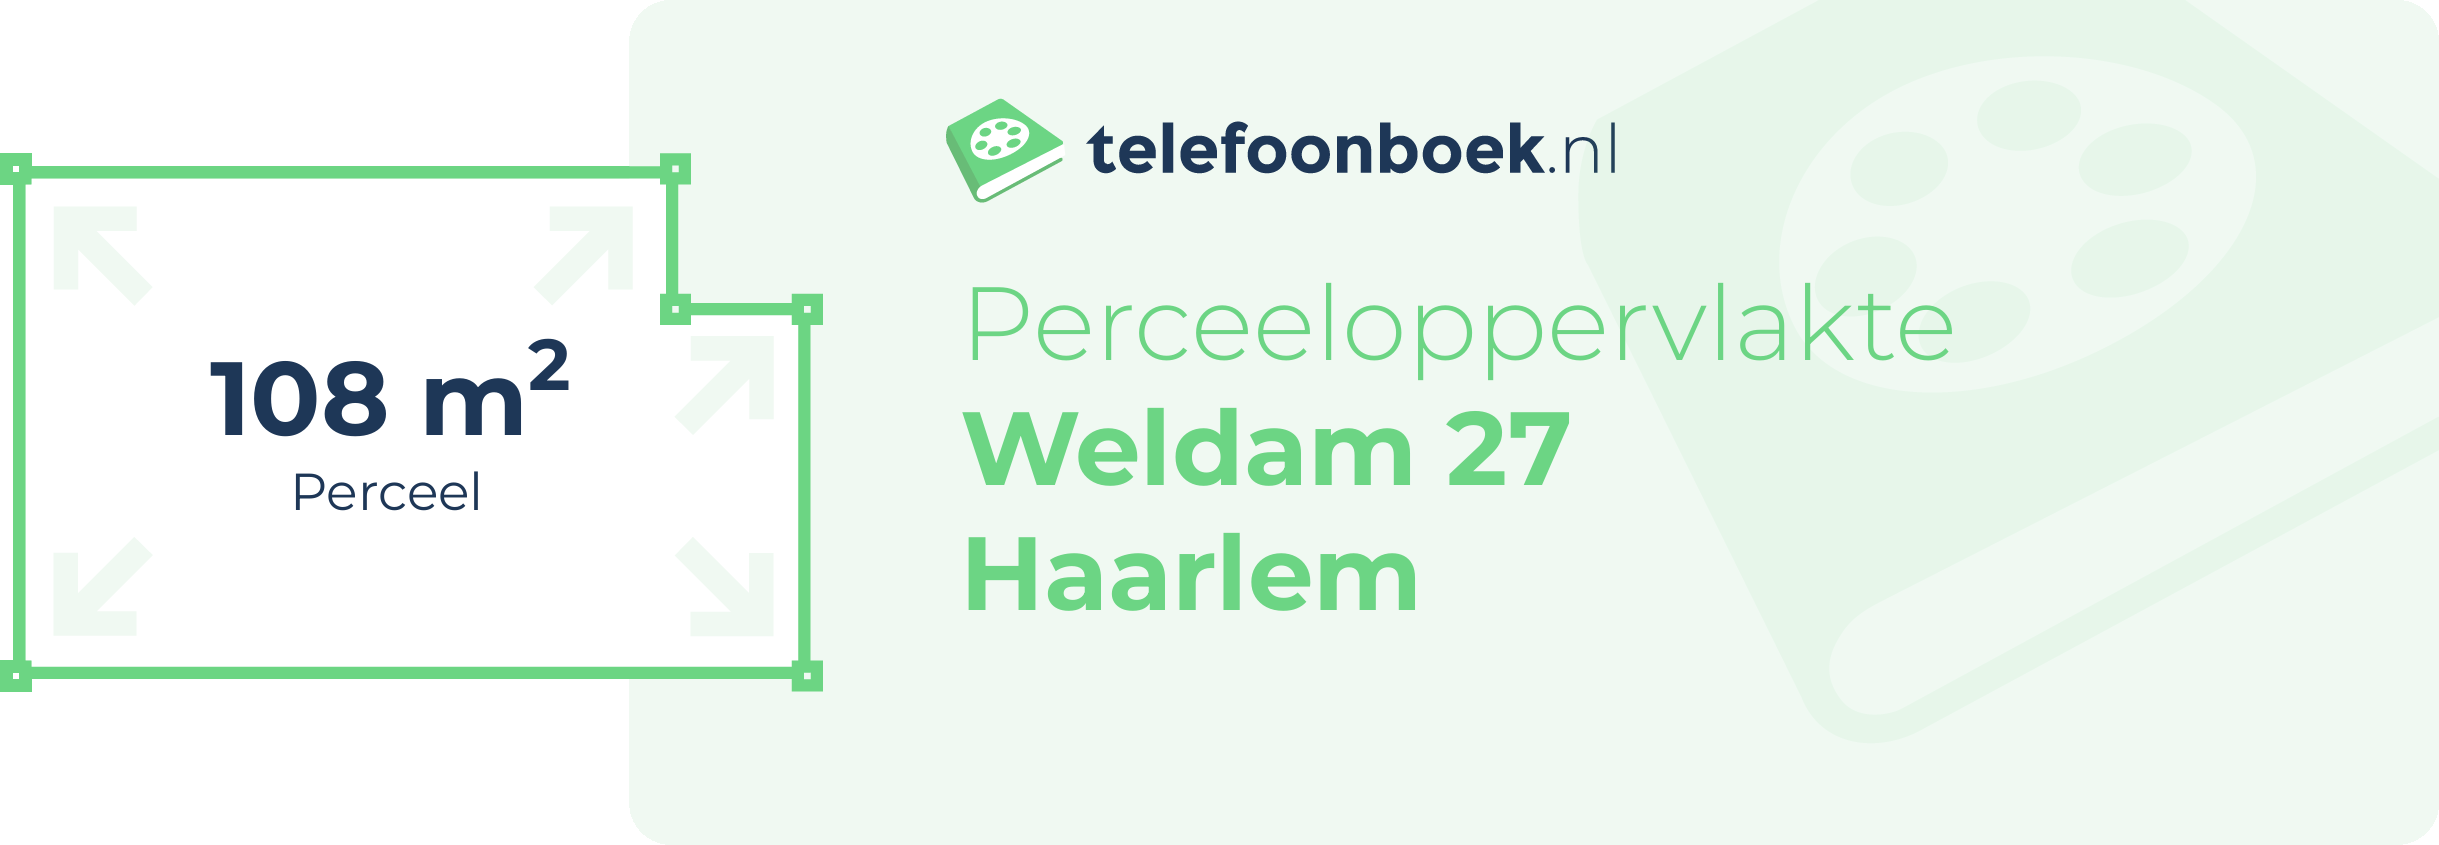 Perceeloppervlakte Weldam 27 Haarlem